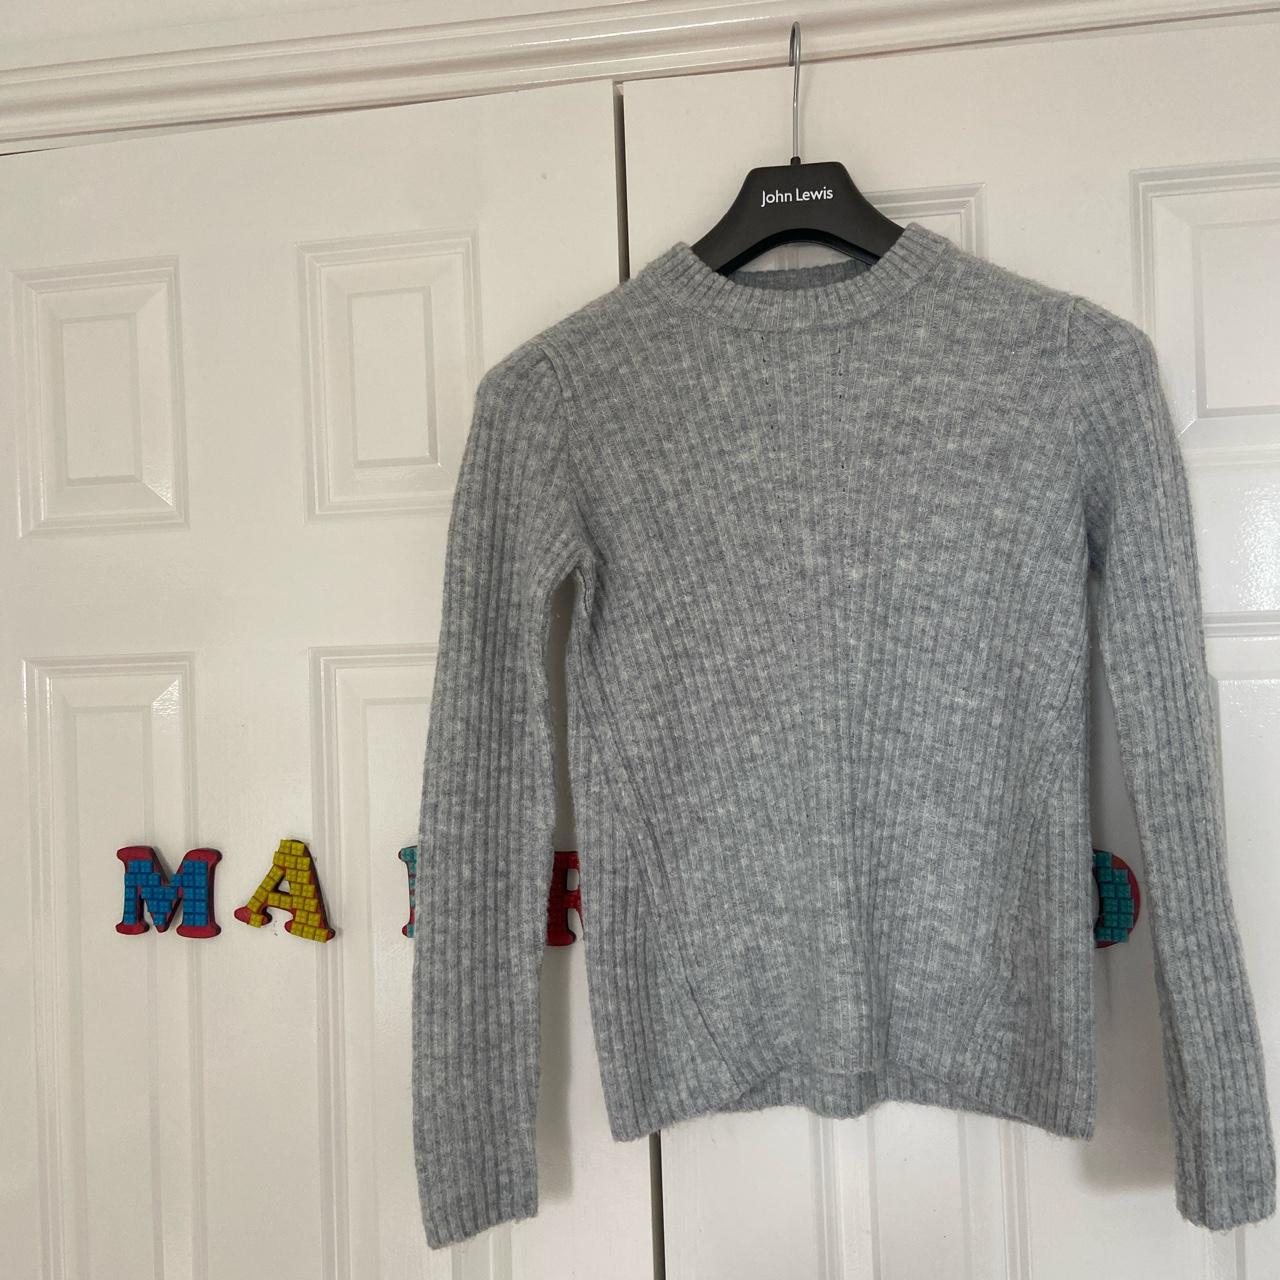 Gorgeous grey knitted Miss selfridge jumper in a... - Depop